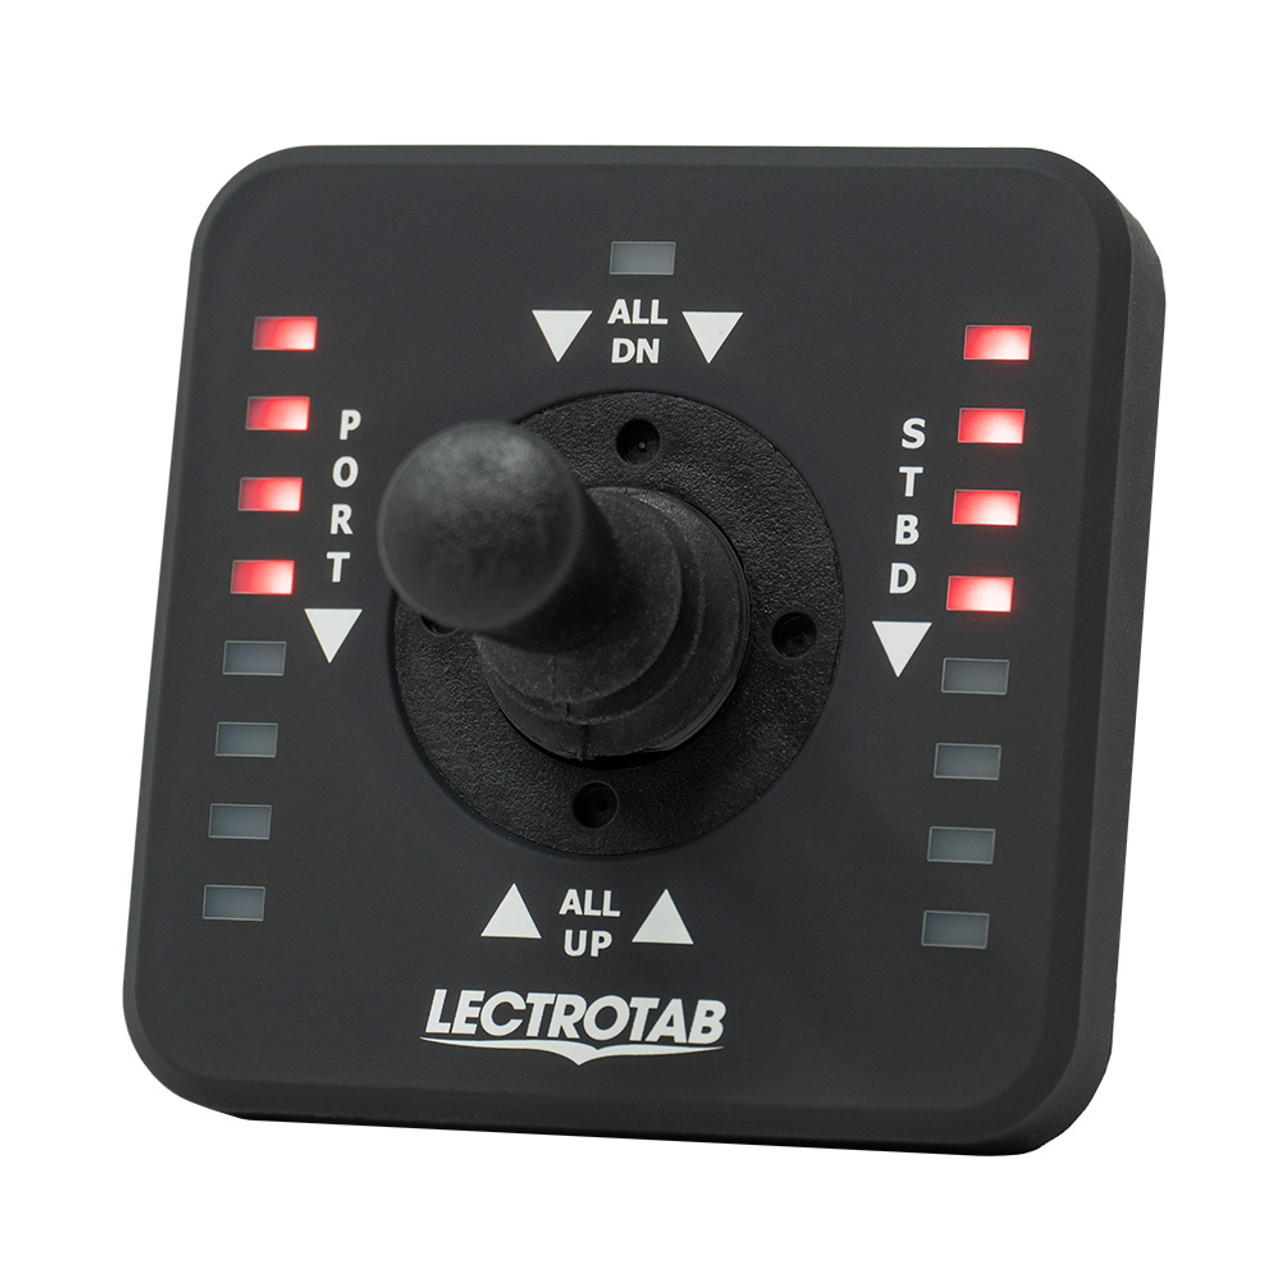 Lectrotab Joystick LED Trim Tab Control [JLC-11]